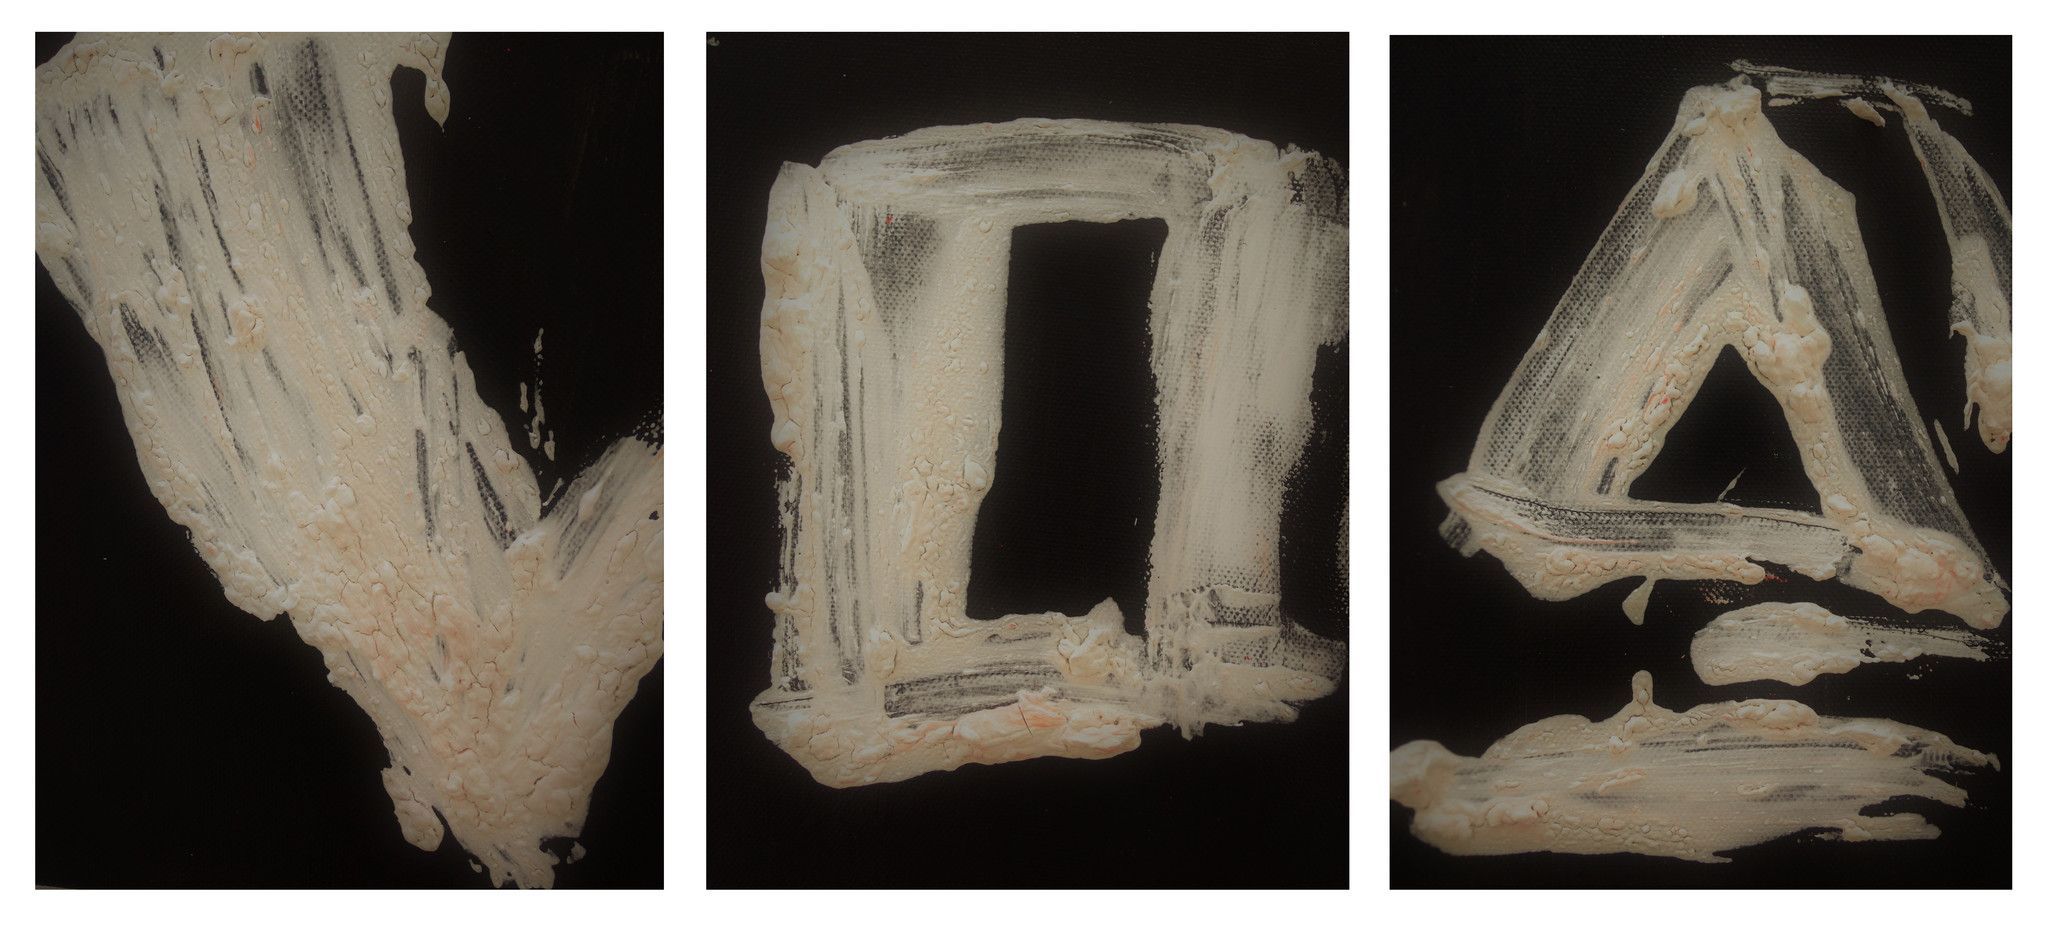 MIXED MEDIA GABRIELLA TOLLI ' PRISMA-CUBO-PIRAMIDE ' dimensioni L 54 x H 24  cm. | Opere Pittura | Shop Online: ArtOnline20 - Art Gallery